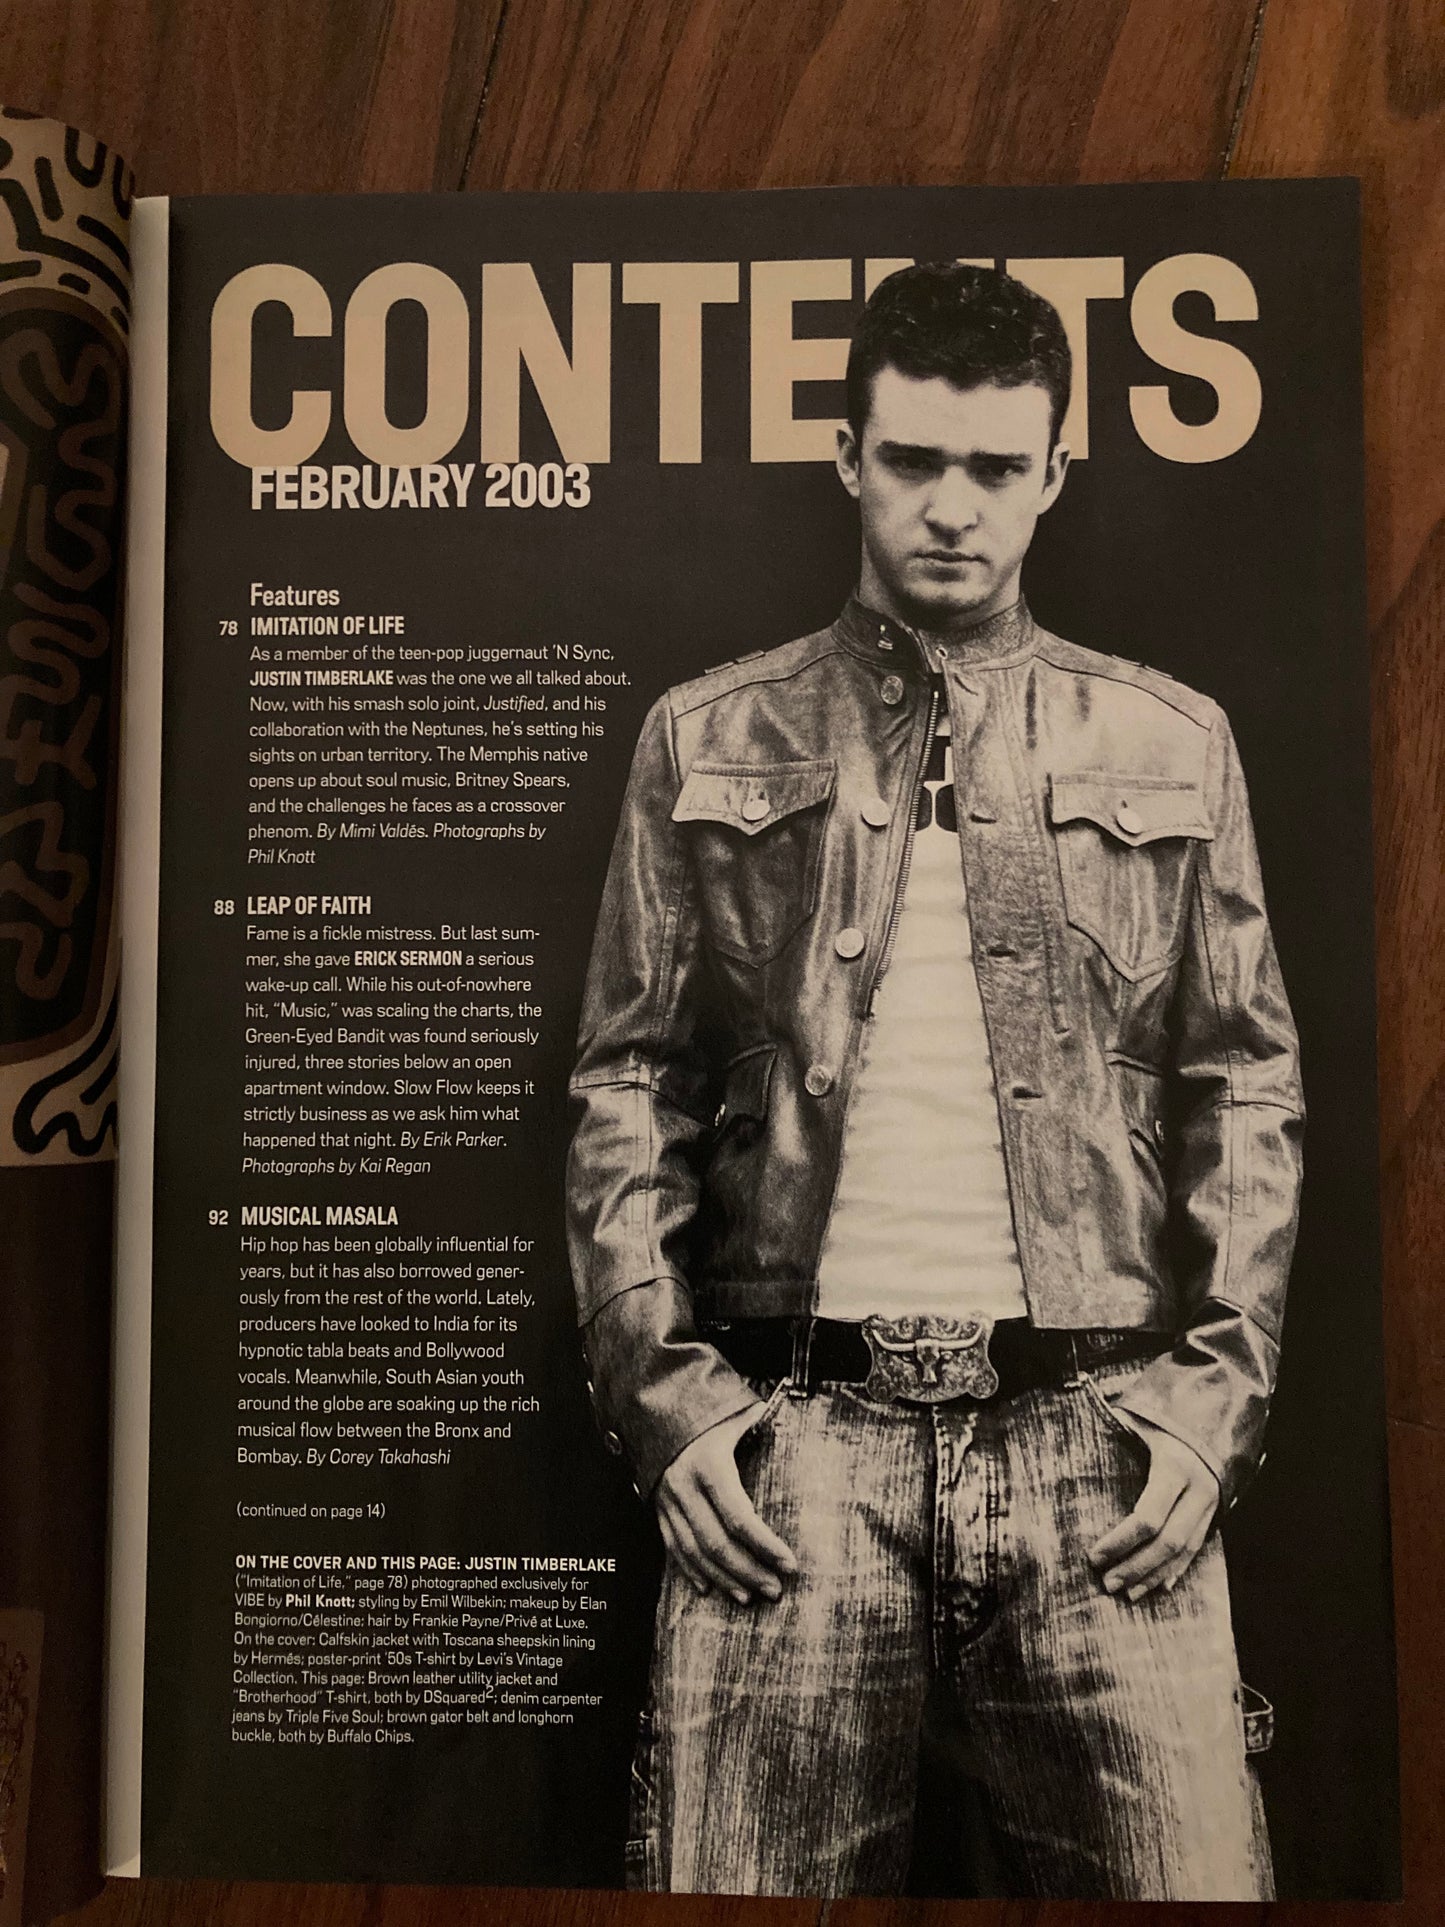 Vibe Magazine February 2003 Justin Timberlake - MoSneaks Shop Online